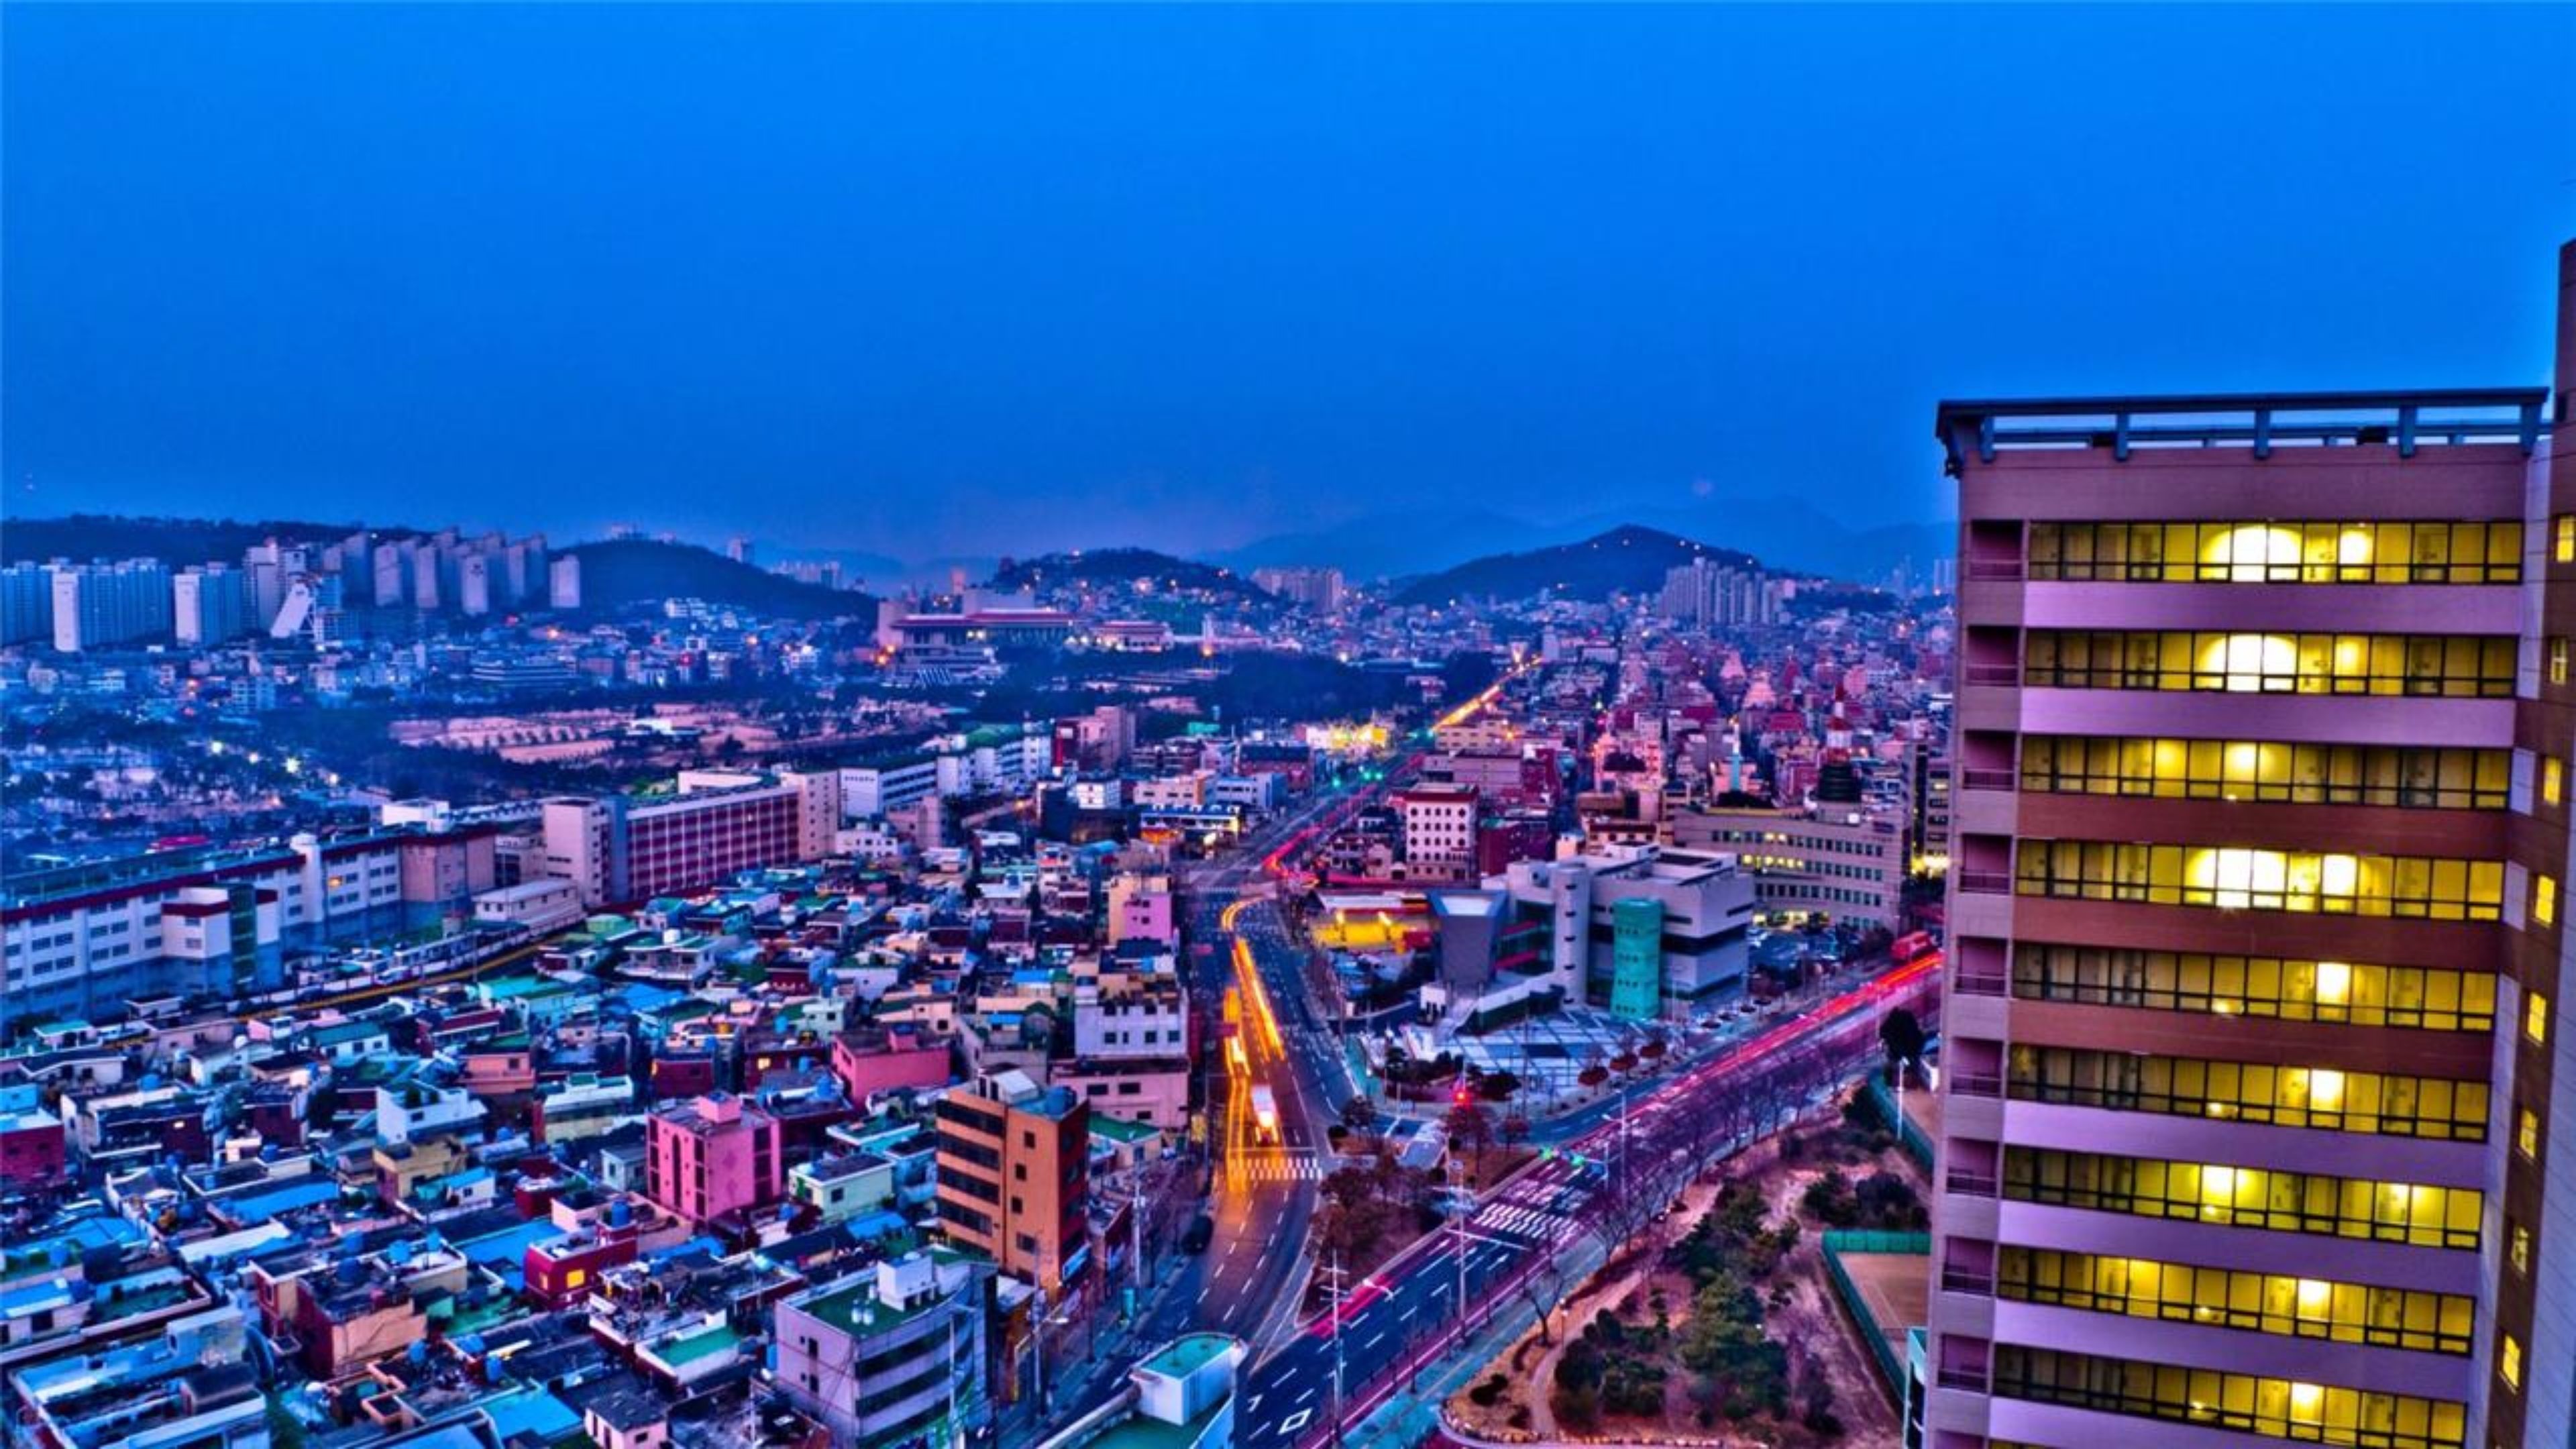 koreanische tapete,metropolregion,stadtbild,stadt,stadtgebiet,nacht